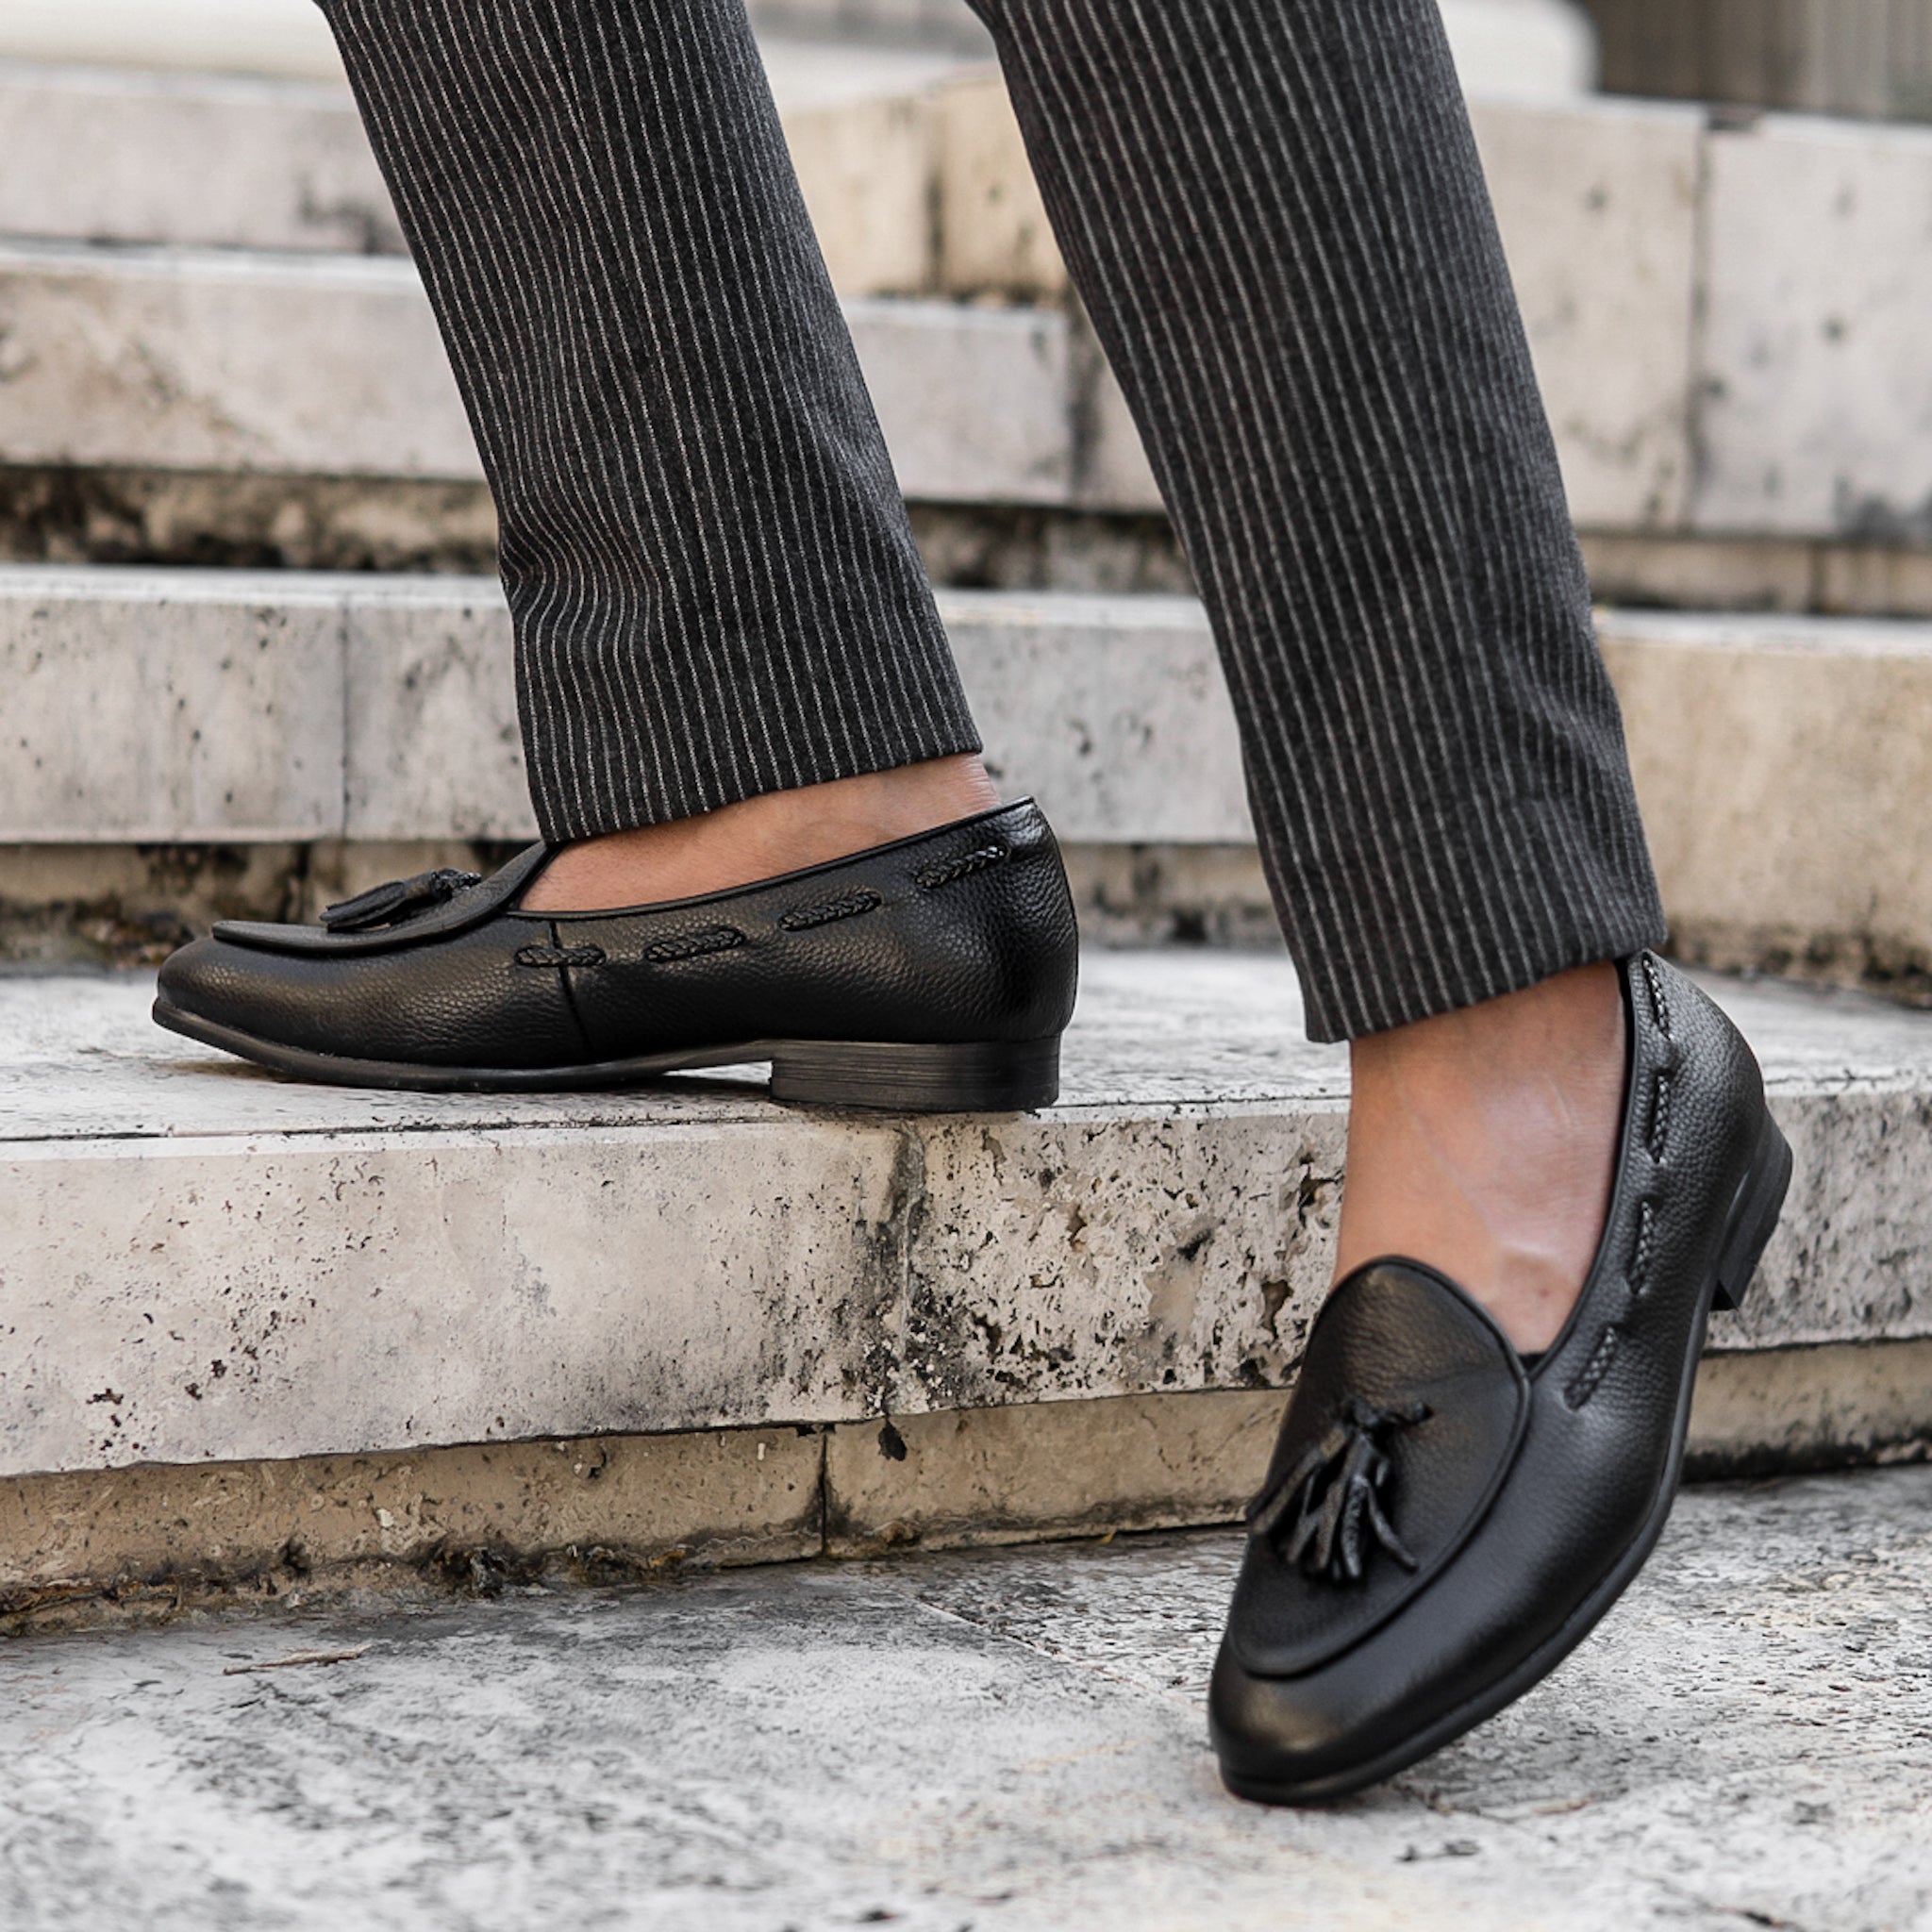 Belgian Loafer With Tassel - Black Pebble Grain Leather | Zeve Shoes